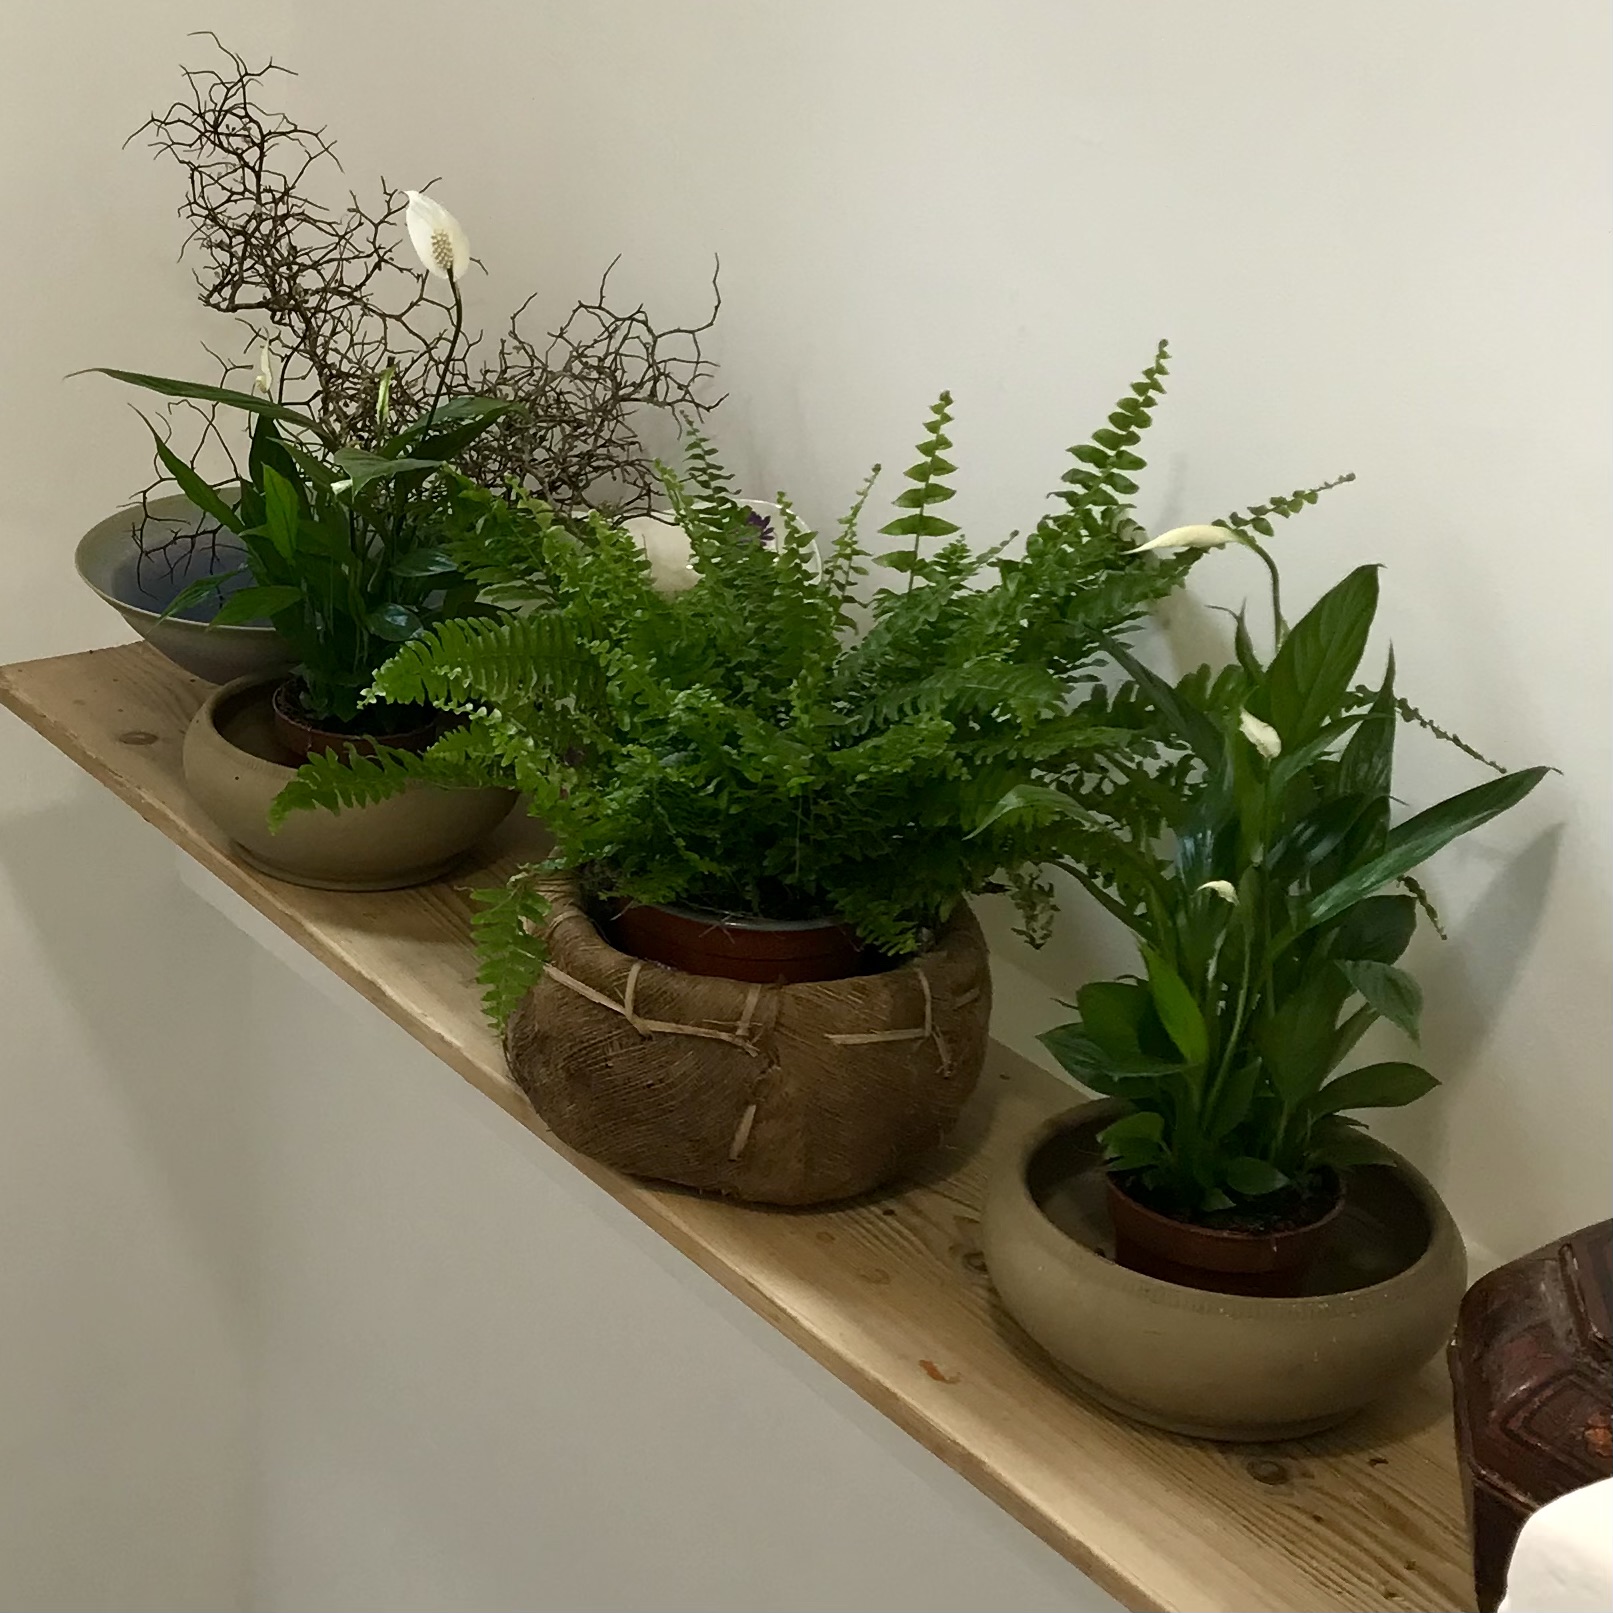 Row of plants on a wooden shelf